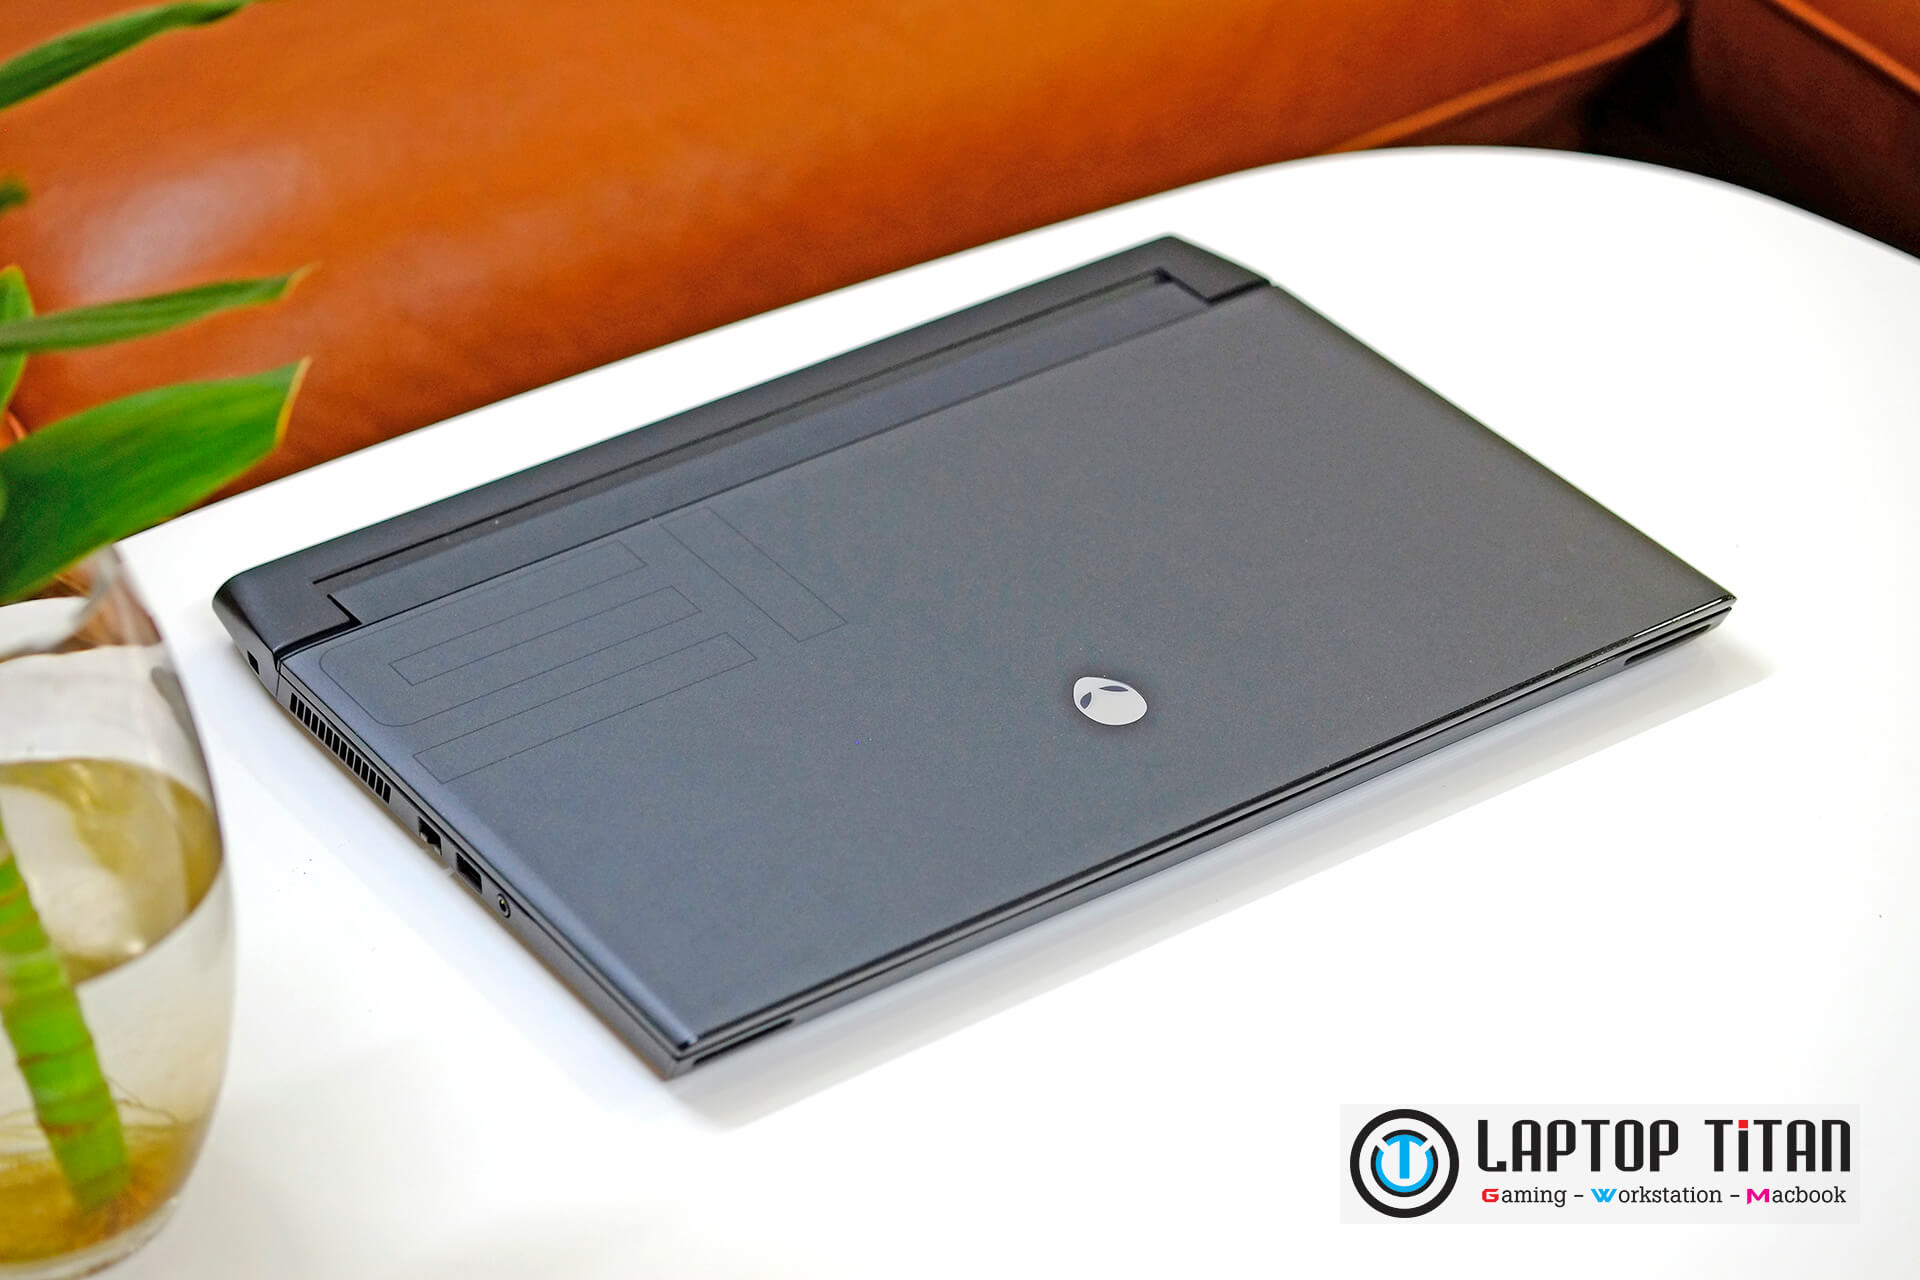 Dell-Alienware-M15-R3-laptoptitan-01.jpg